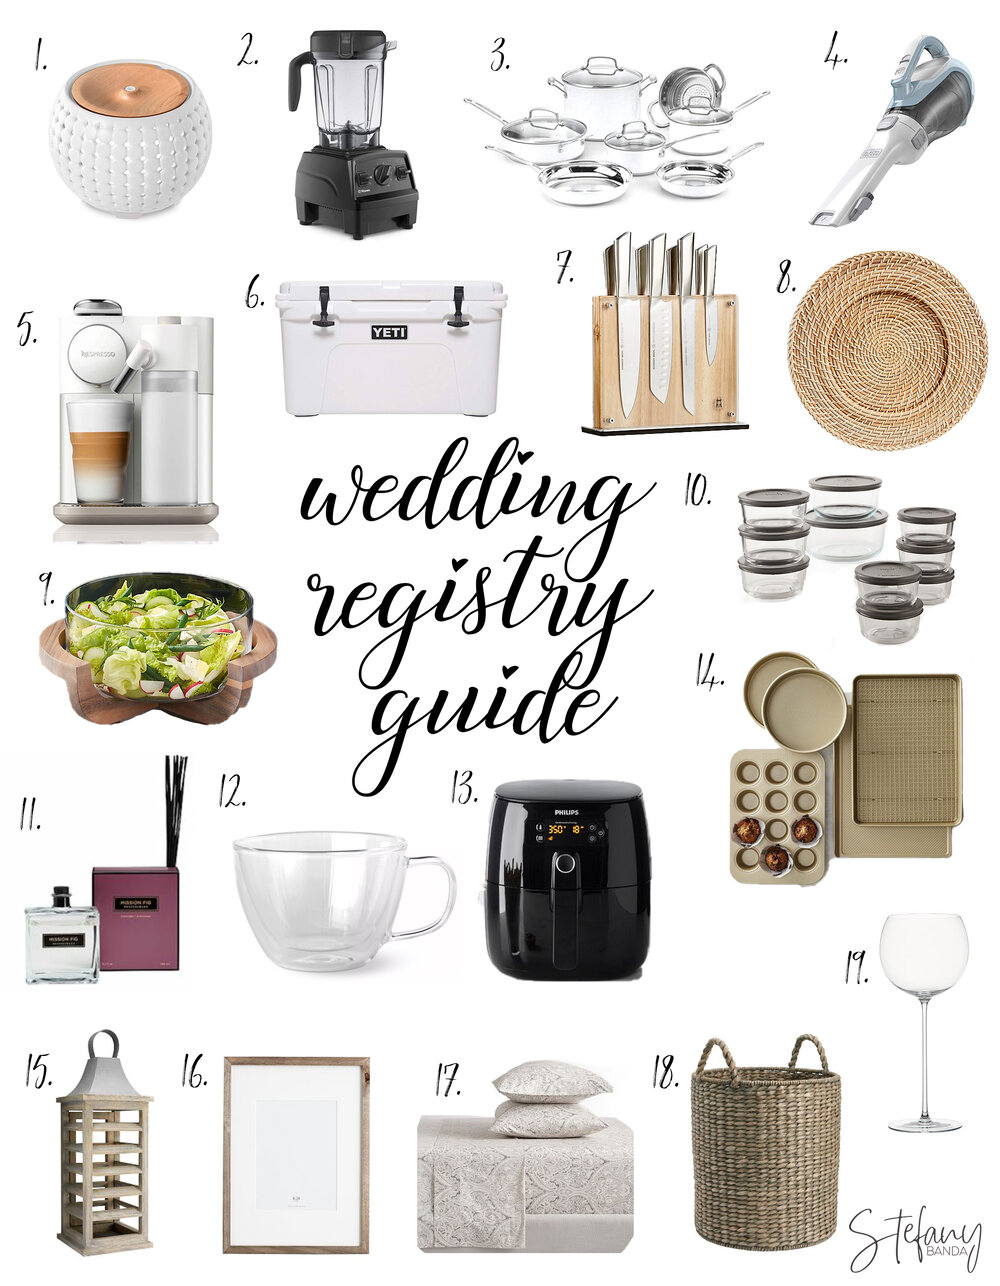 Wedding Registry Guide - Stefany Bare Blog